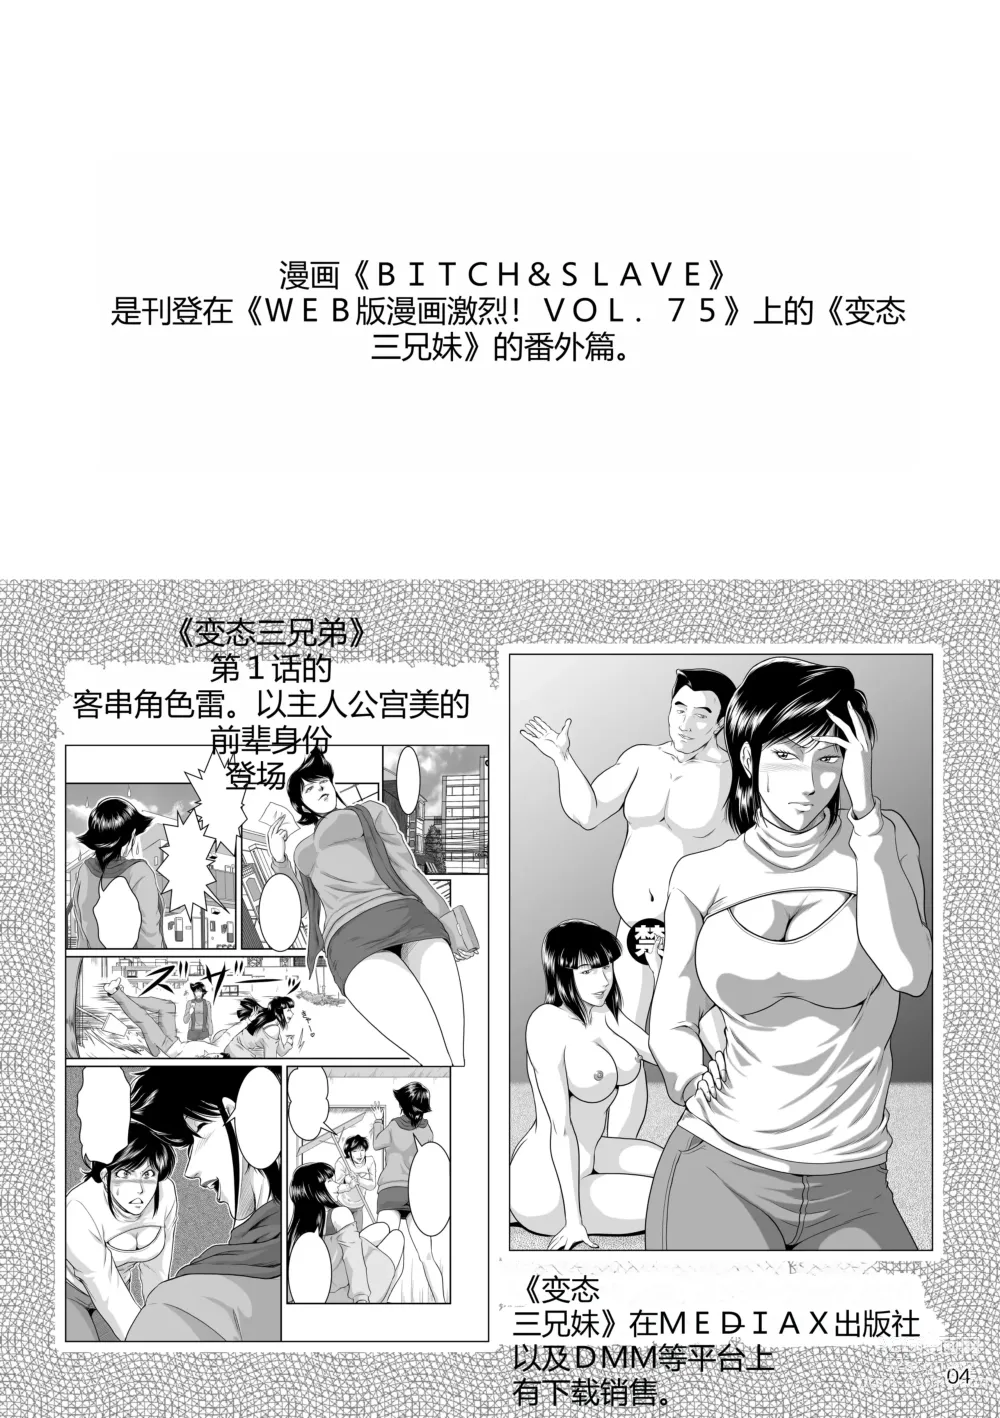 Page 6 of doujinshi Bitch & Slave